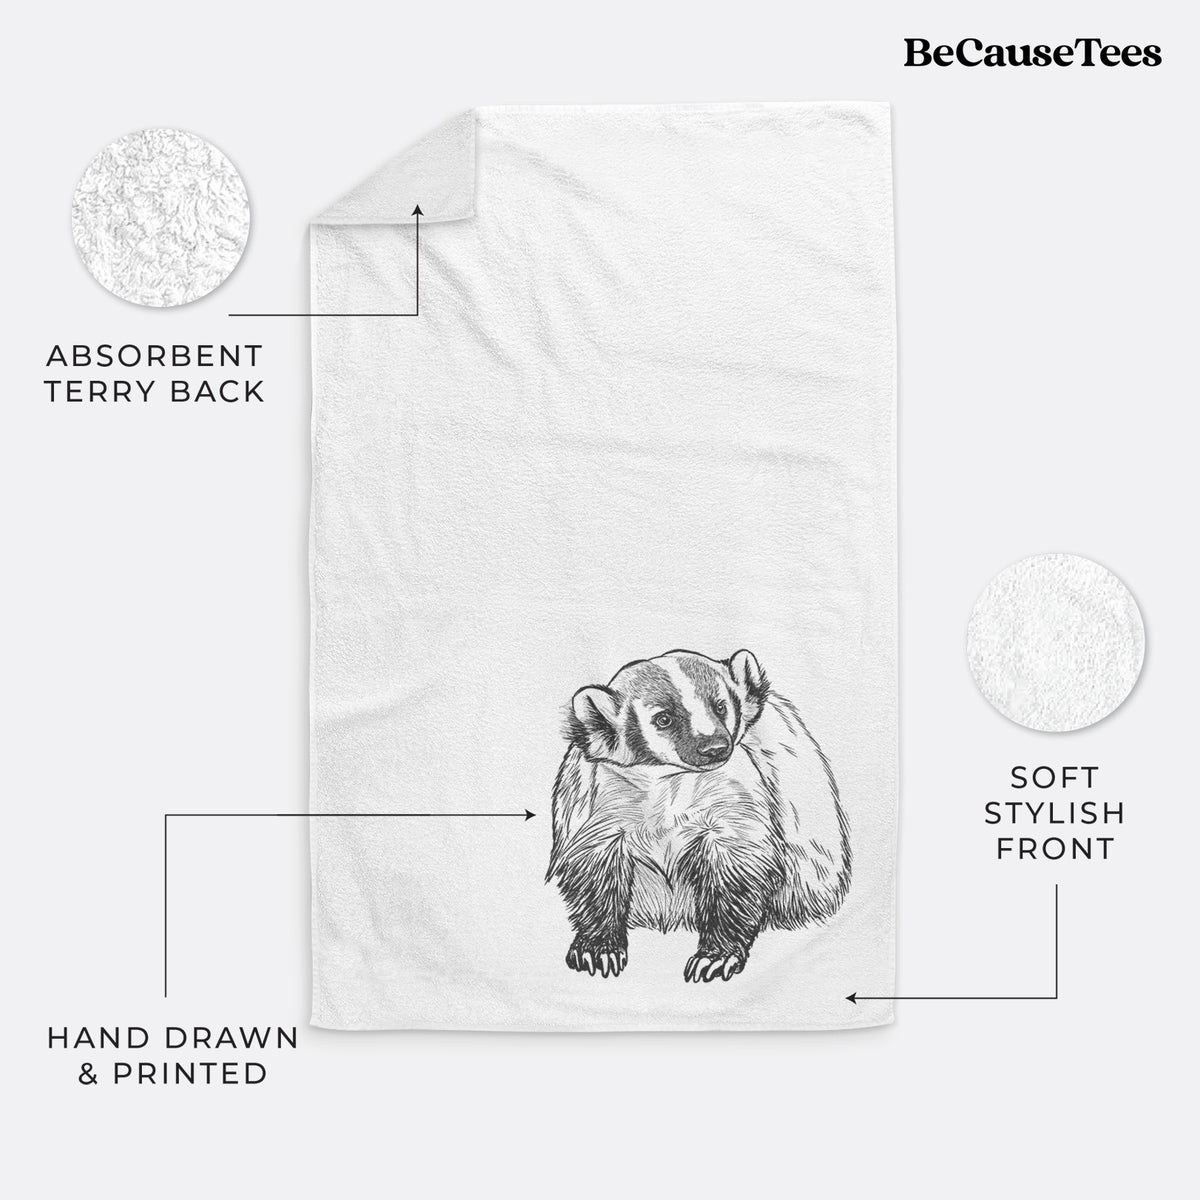 American Badger - Taxidea taxus Hand Towel